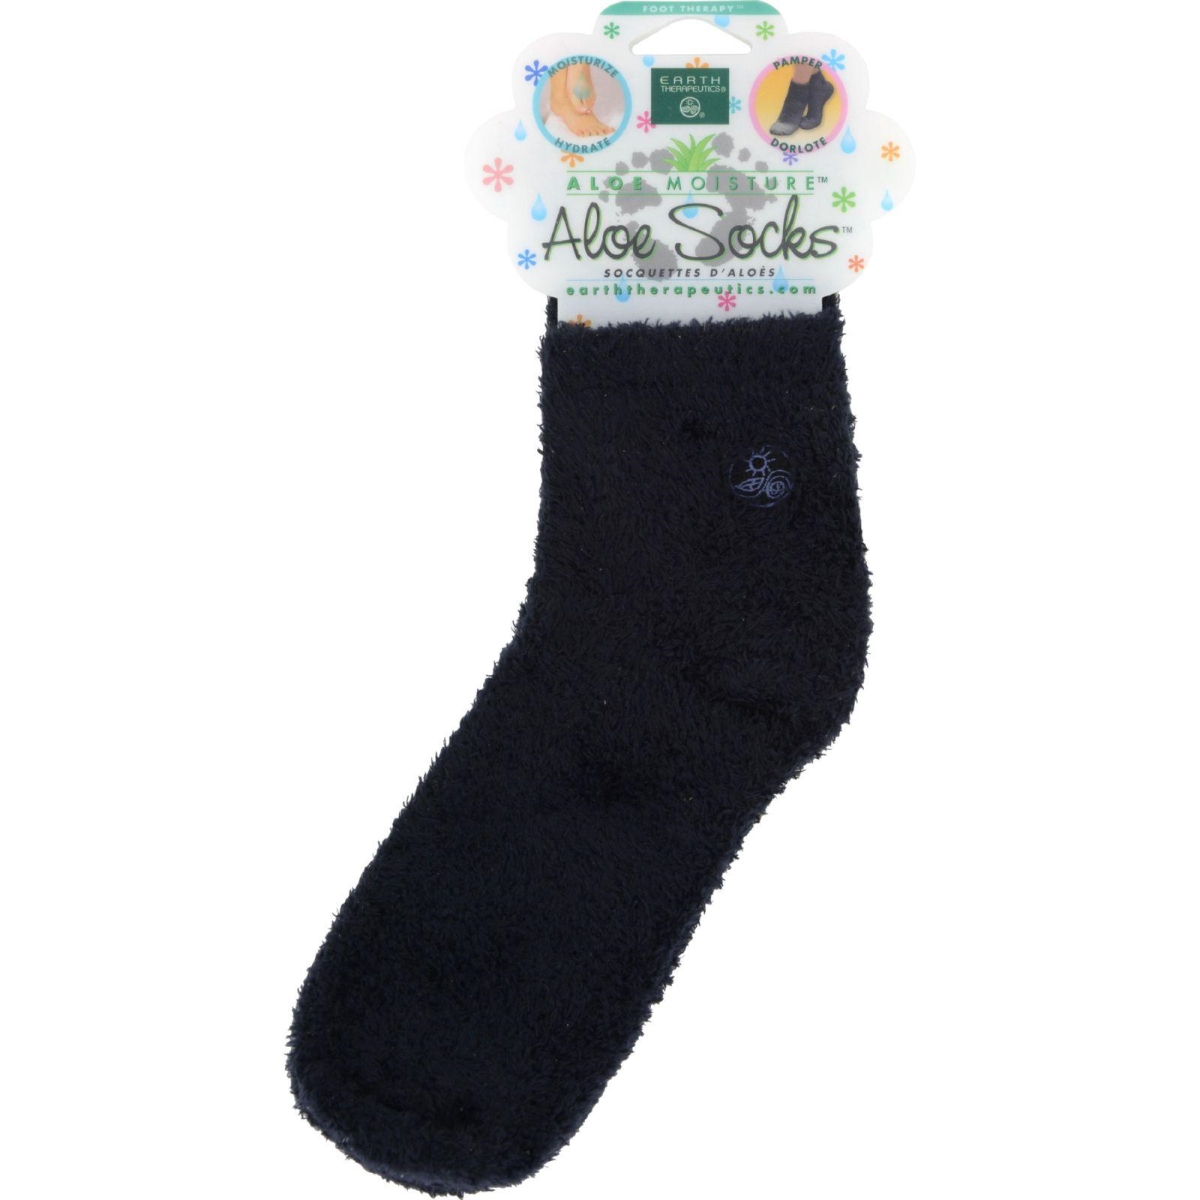 Hg0634709 Moisturizing Aloe Socks, Black